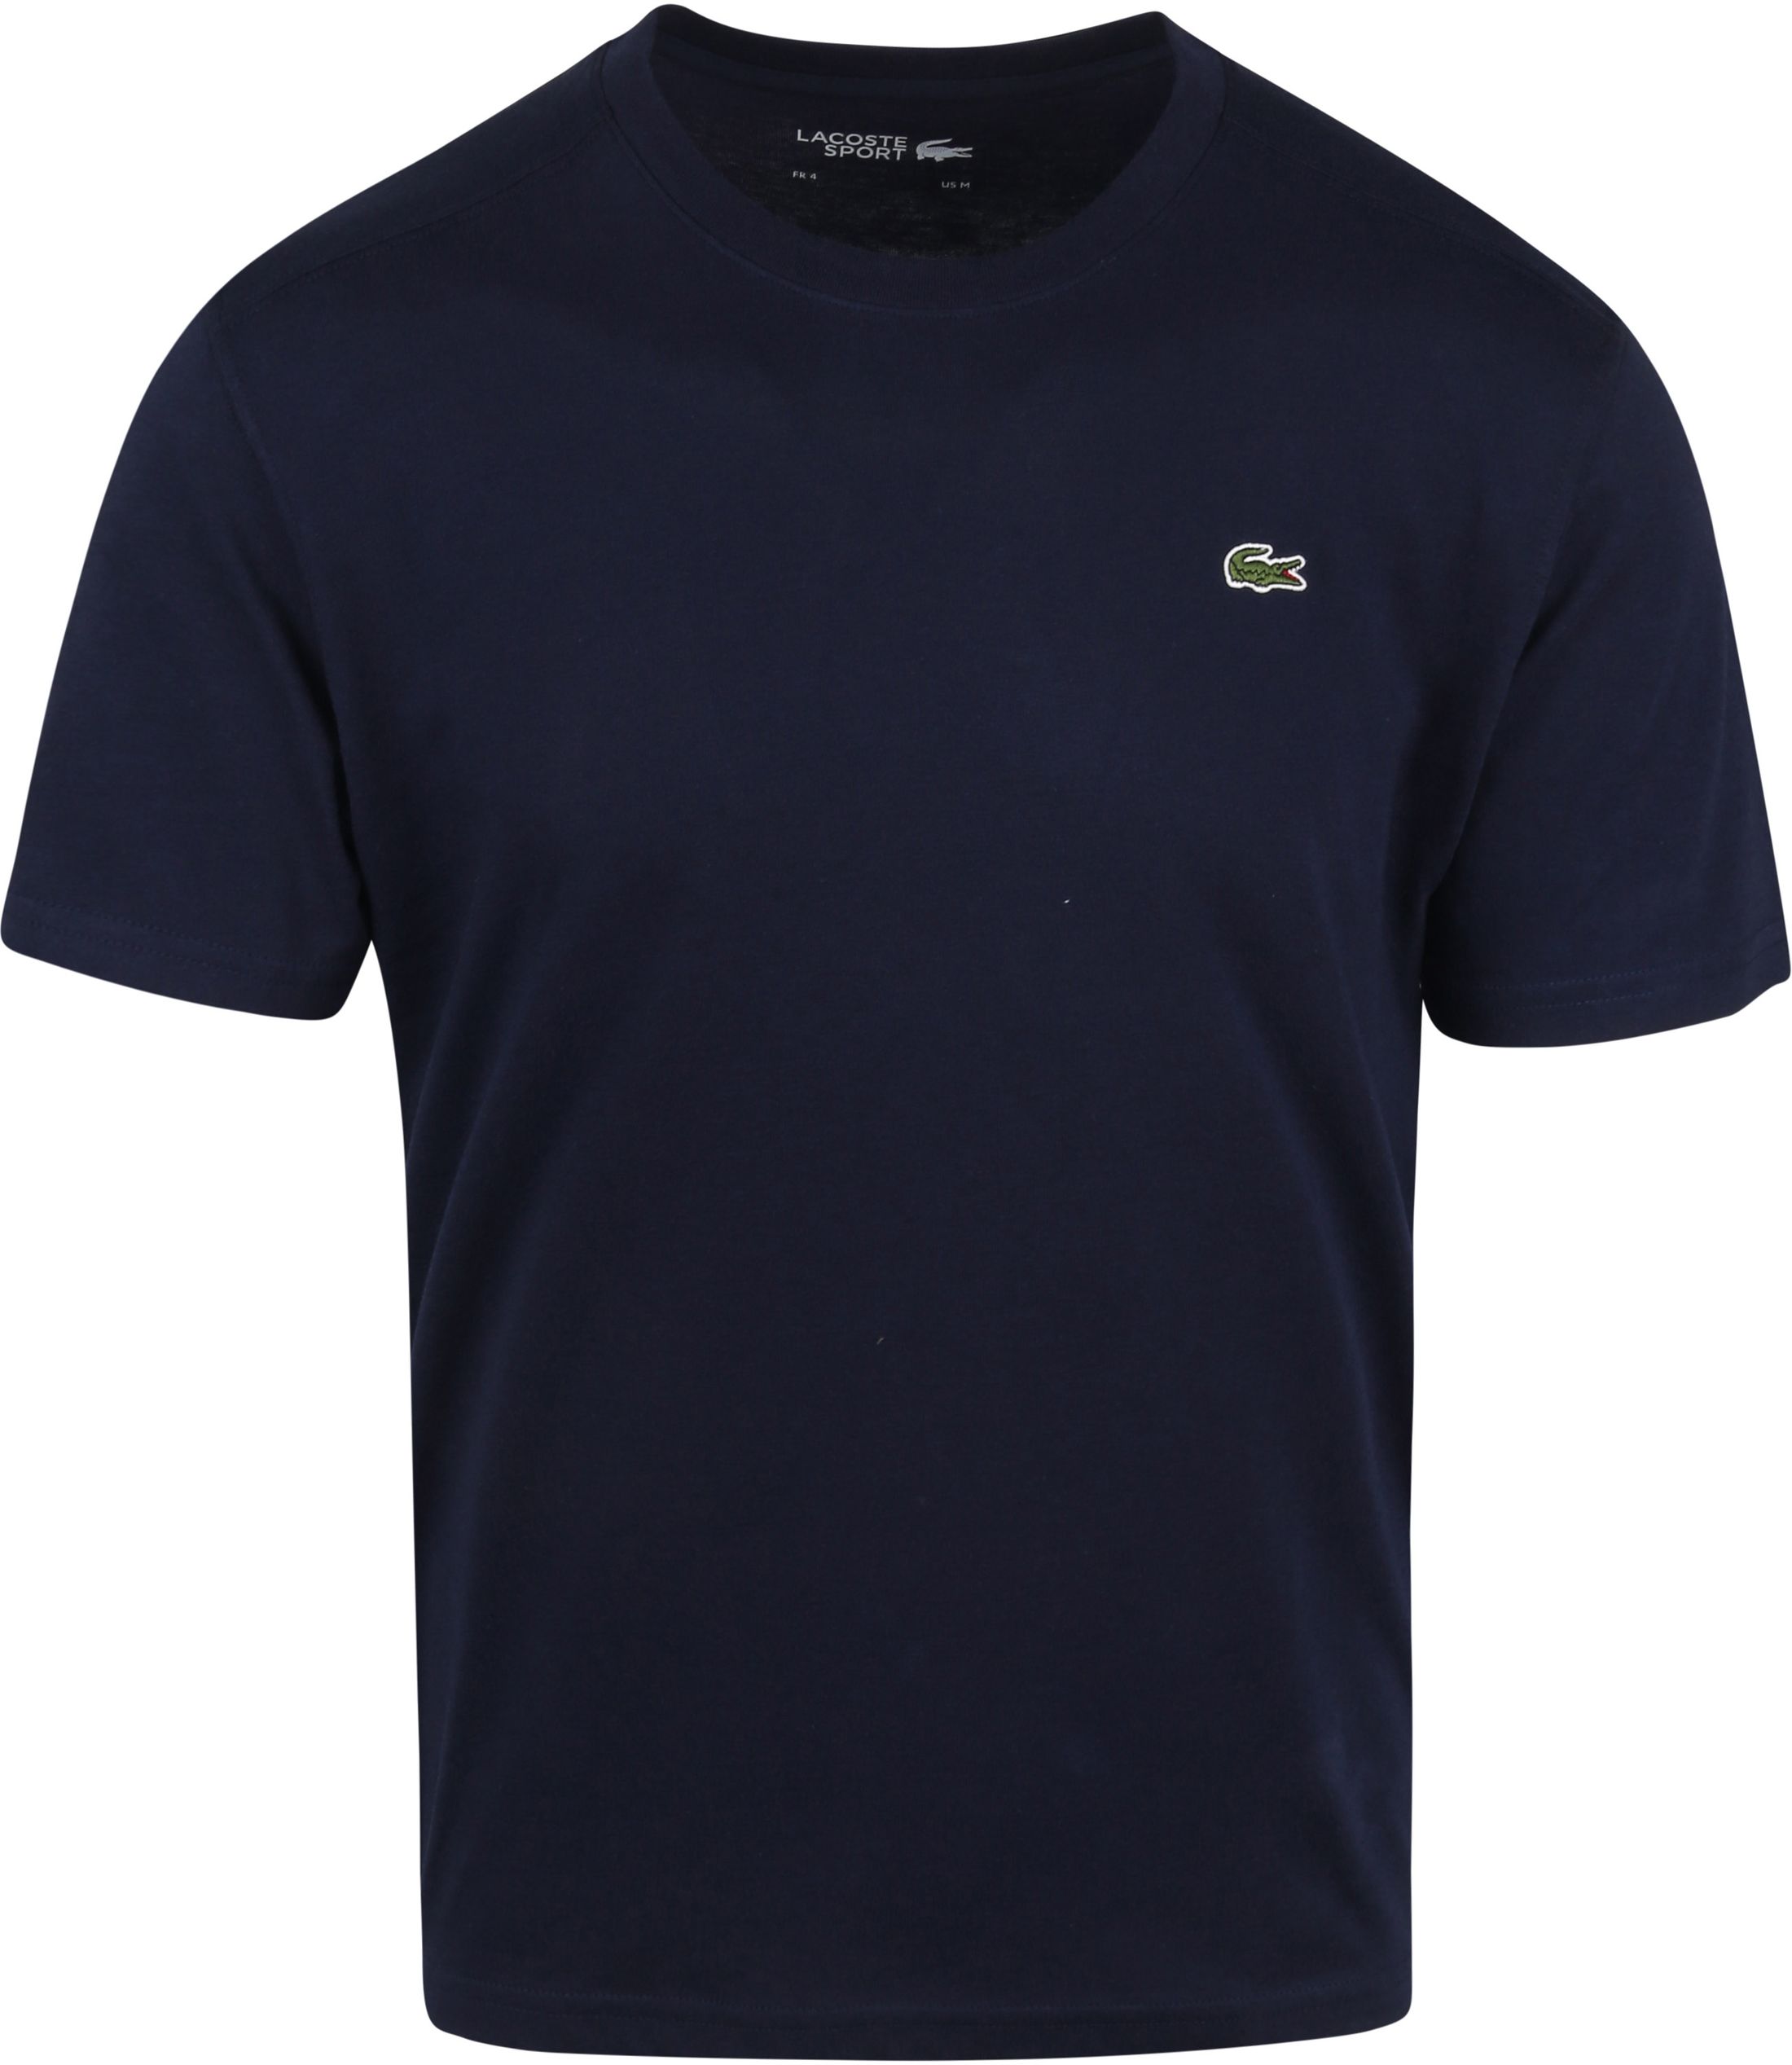 Lacoste Sport T-Shirt Dark Blue Dark Blue size L